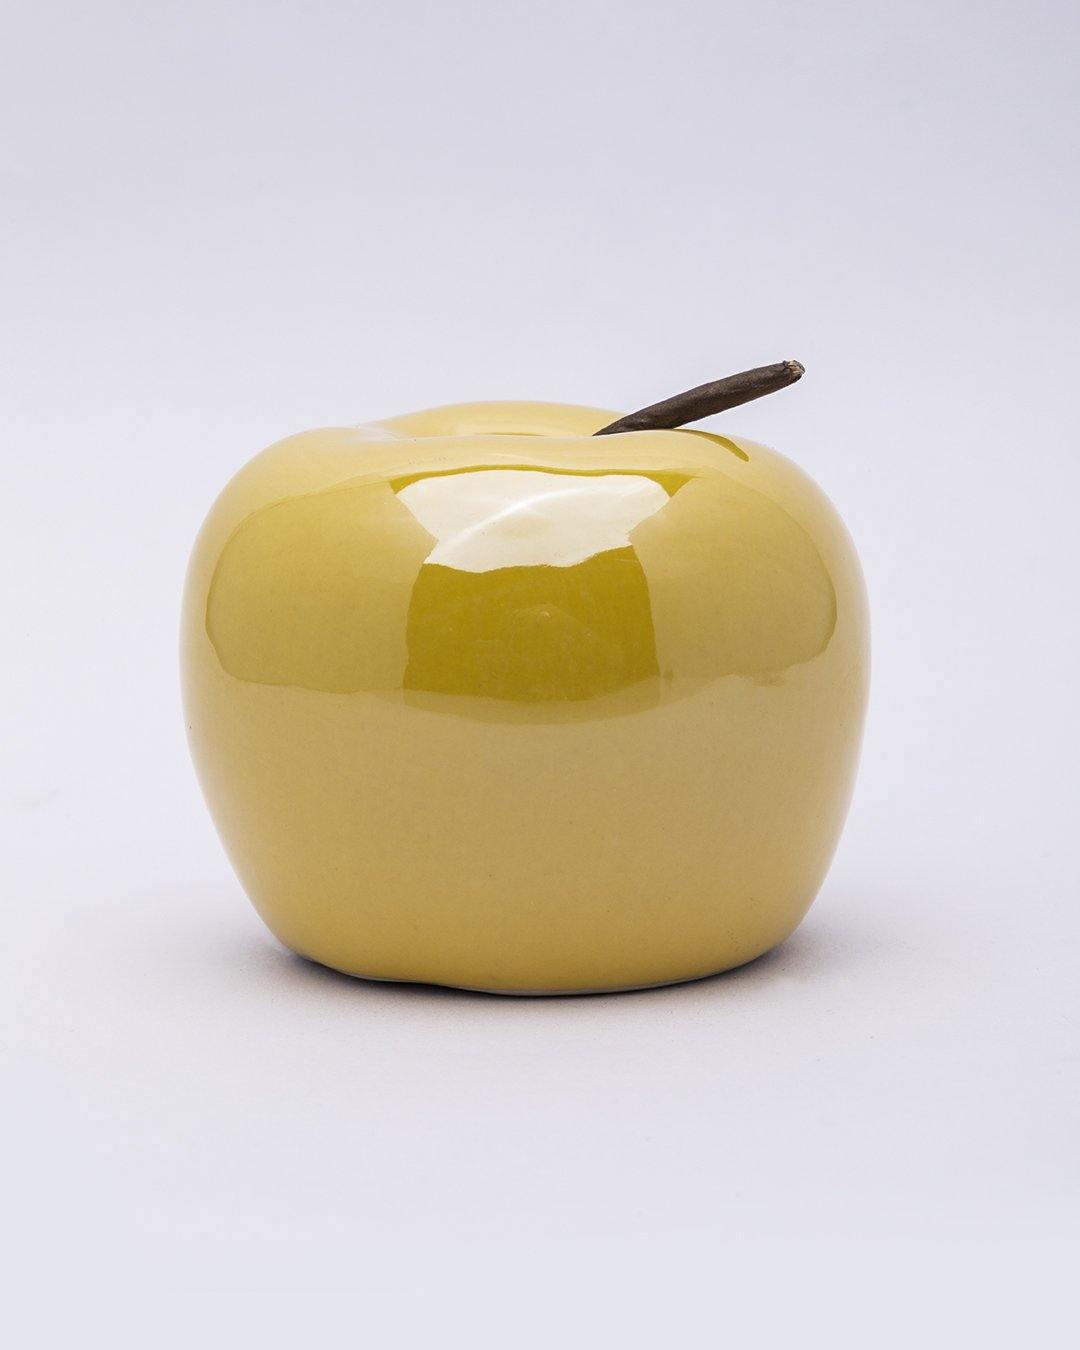 Décor Apple, Decorative Object, Yellow, Ceramic - MARKET 99